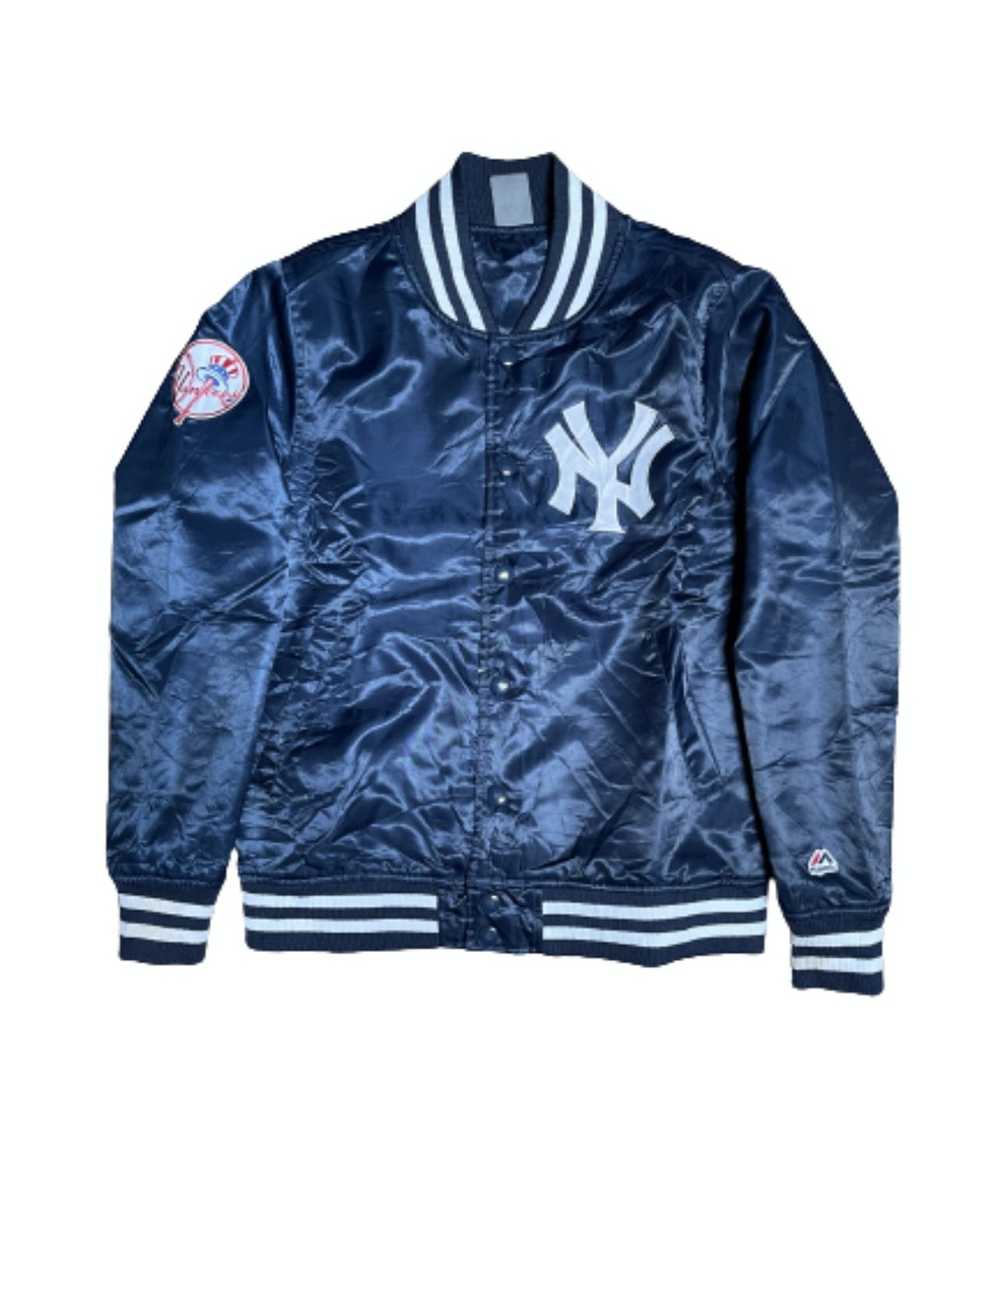 Vintage Majestic New York NY Yankees Jersey Sky Blue MLB Baseball Size XL